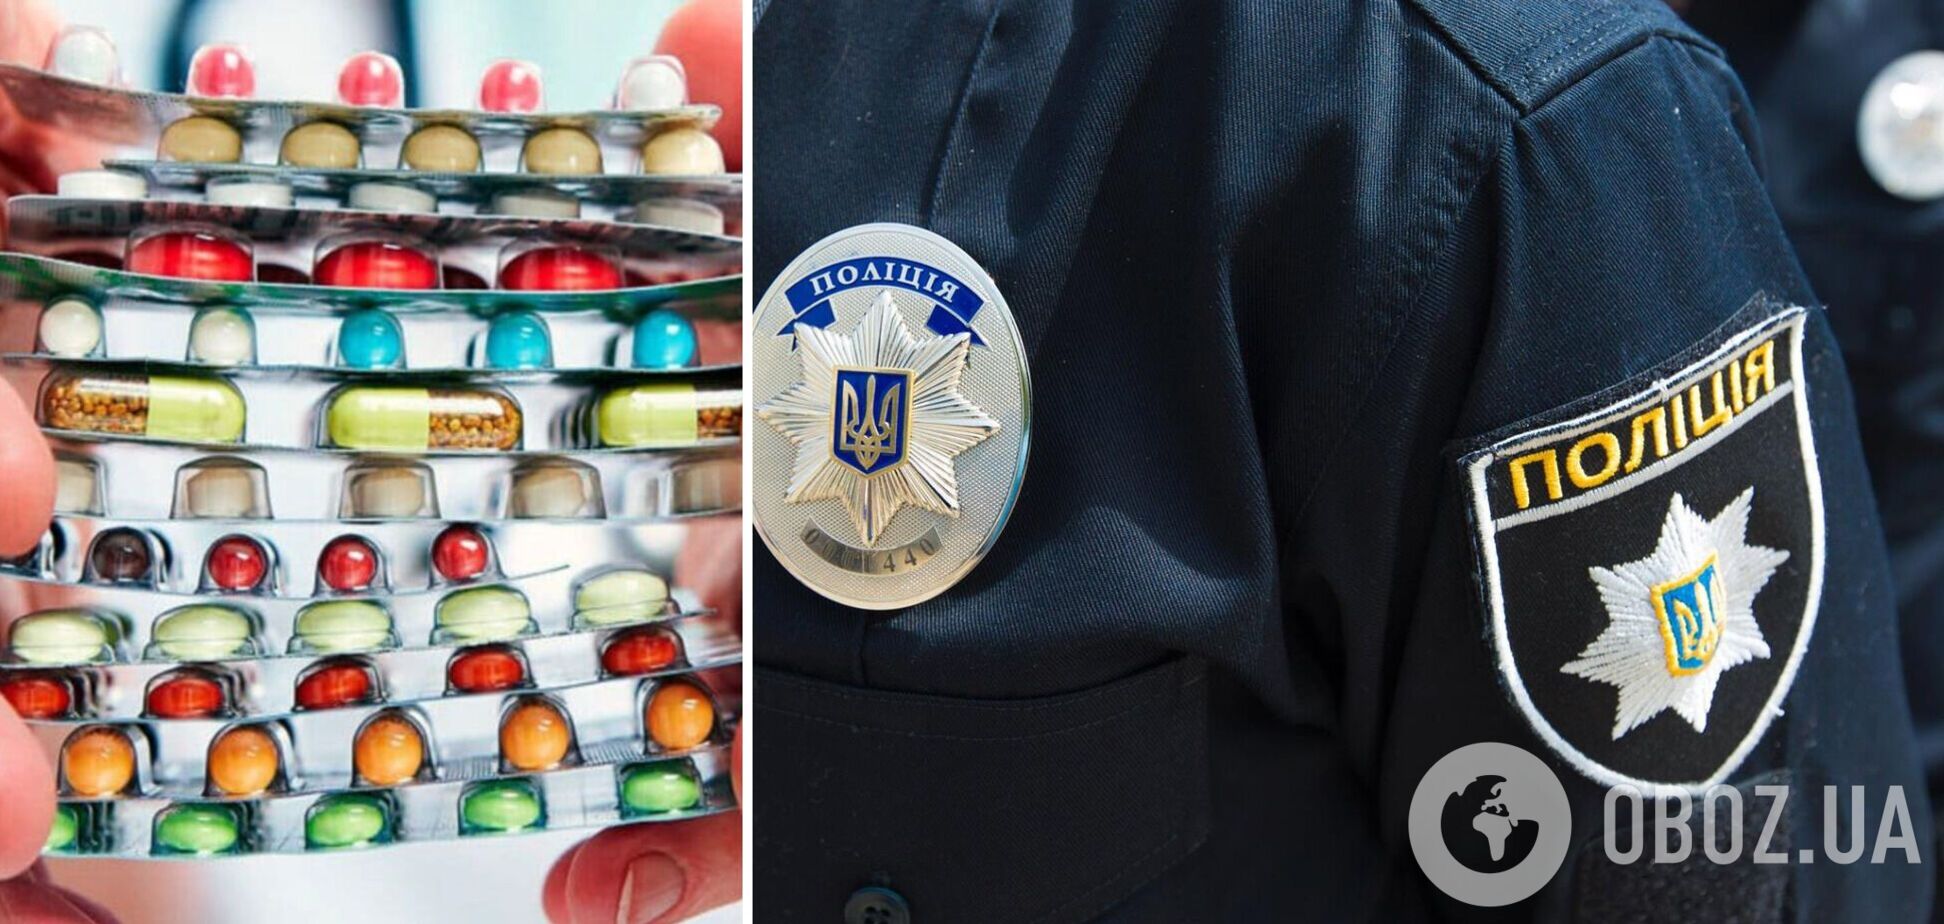 Нацполиция провела обыск на госпредприятии 'Медицинские закупки Украины'